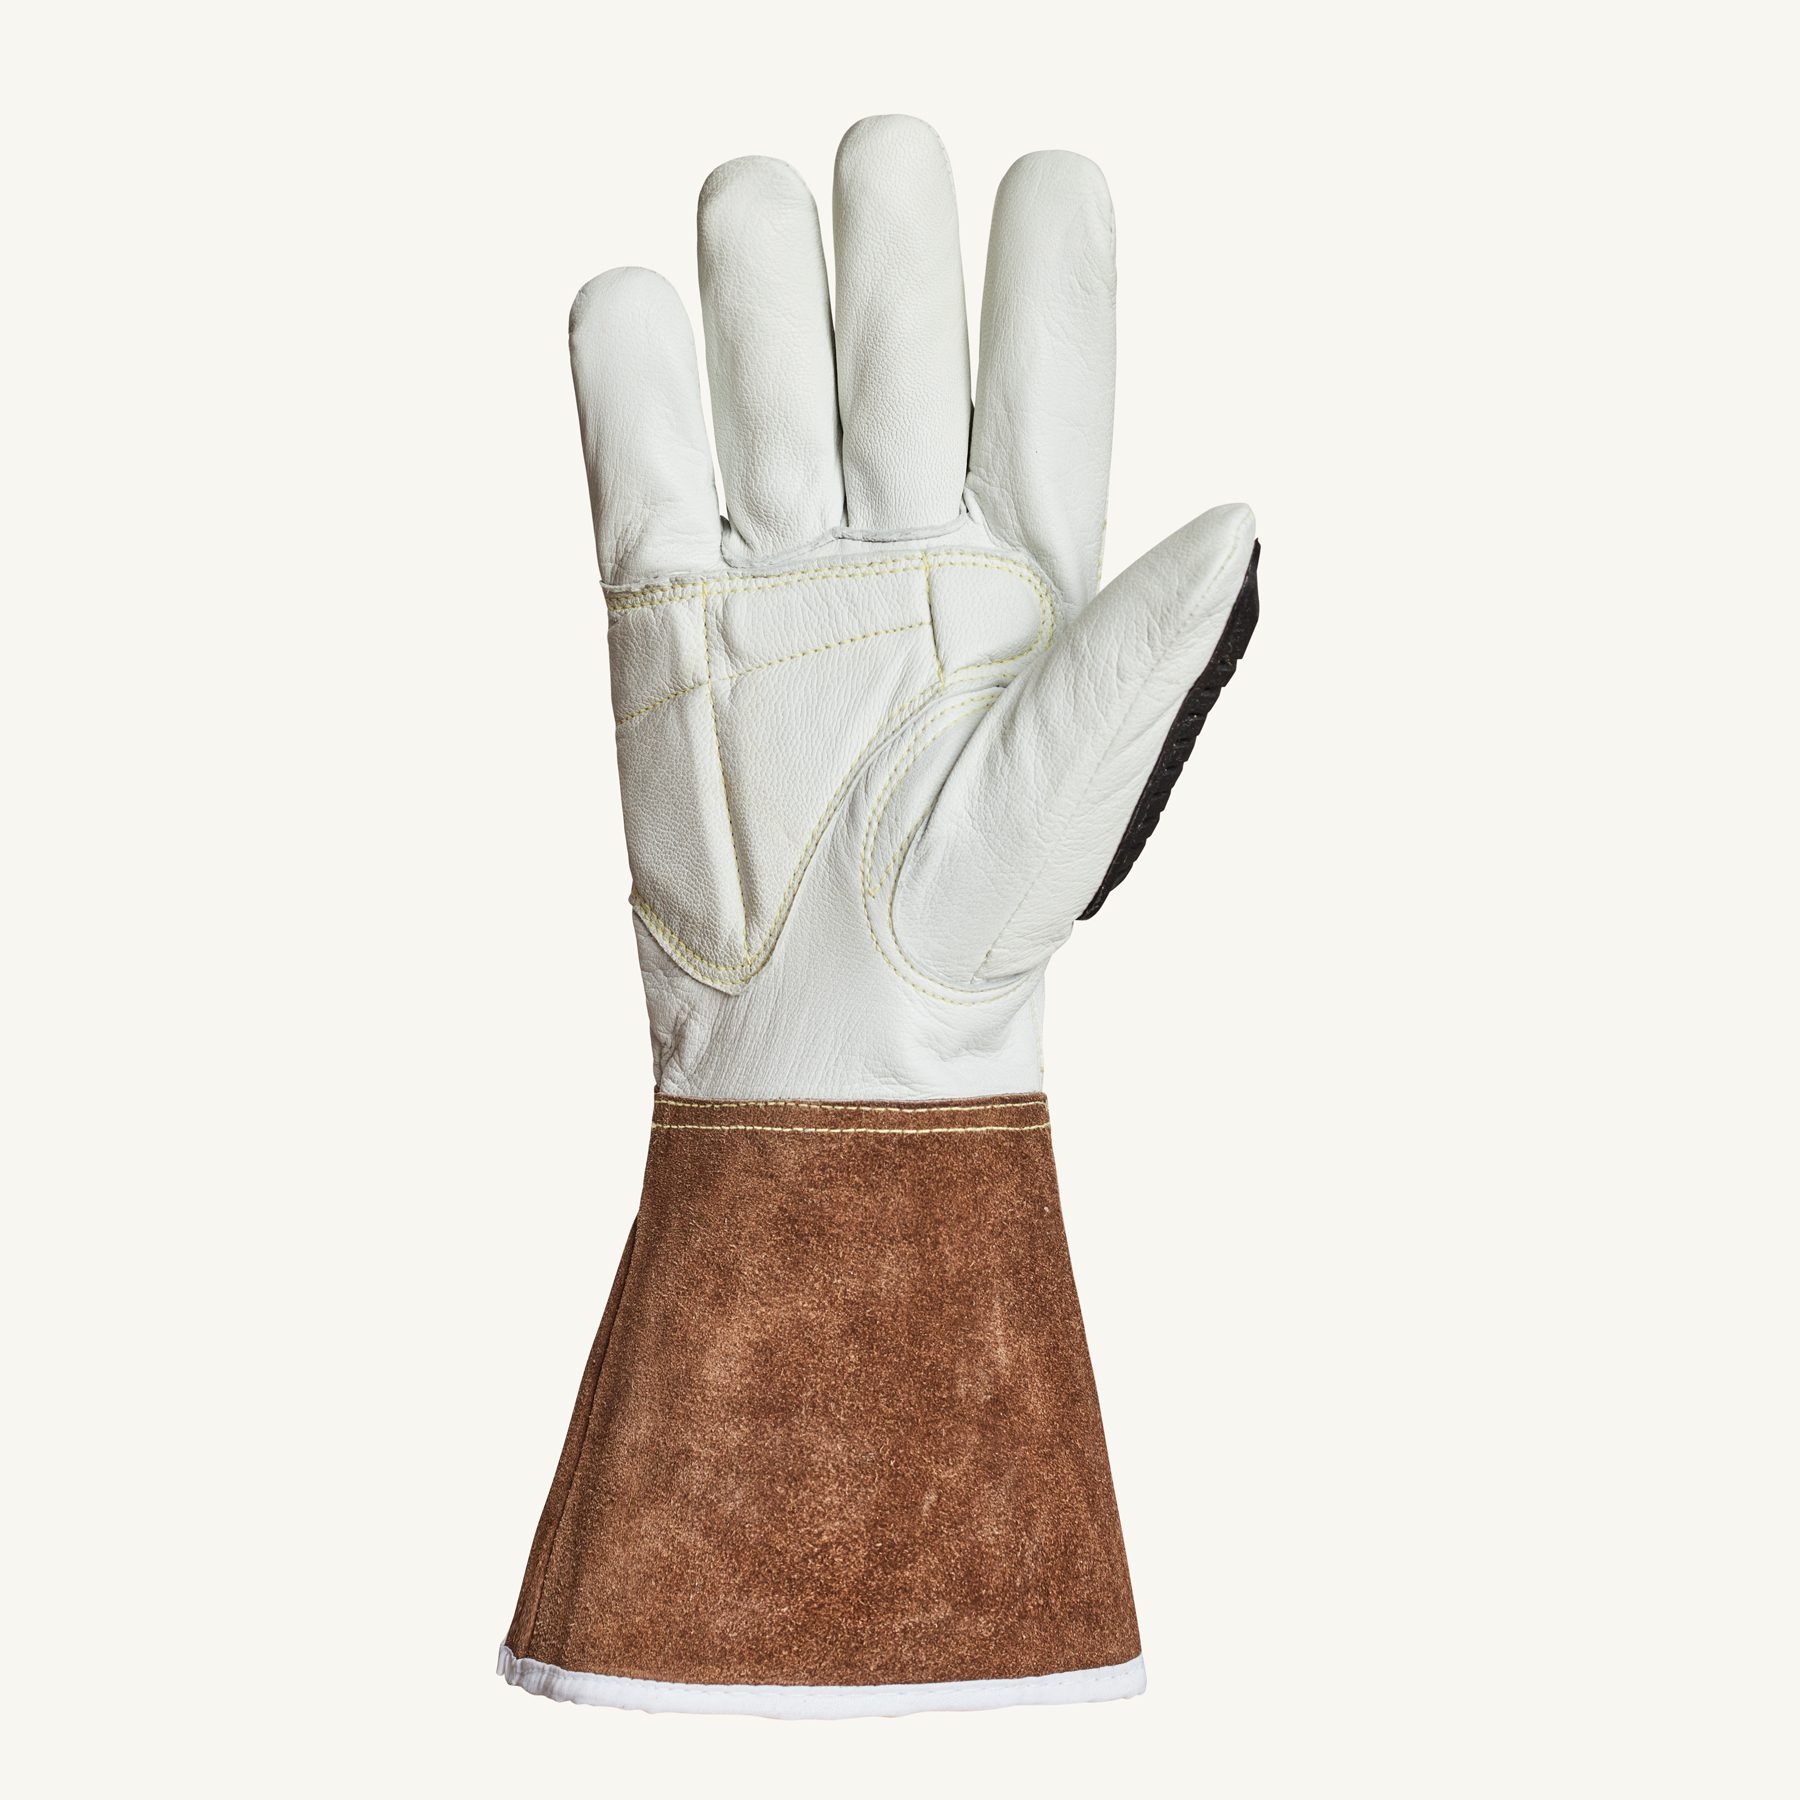 378GKGVBG - Superior Glove® Endura® Cut-Resistant Goatskin Anti-Impact Gauntlet Driver Gloves